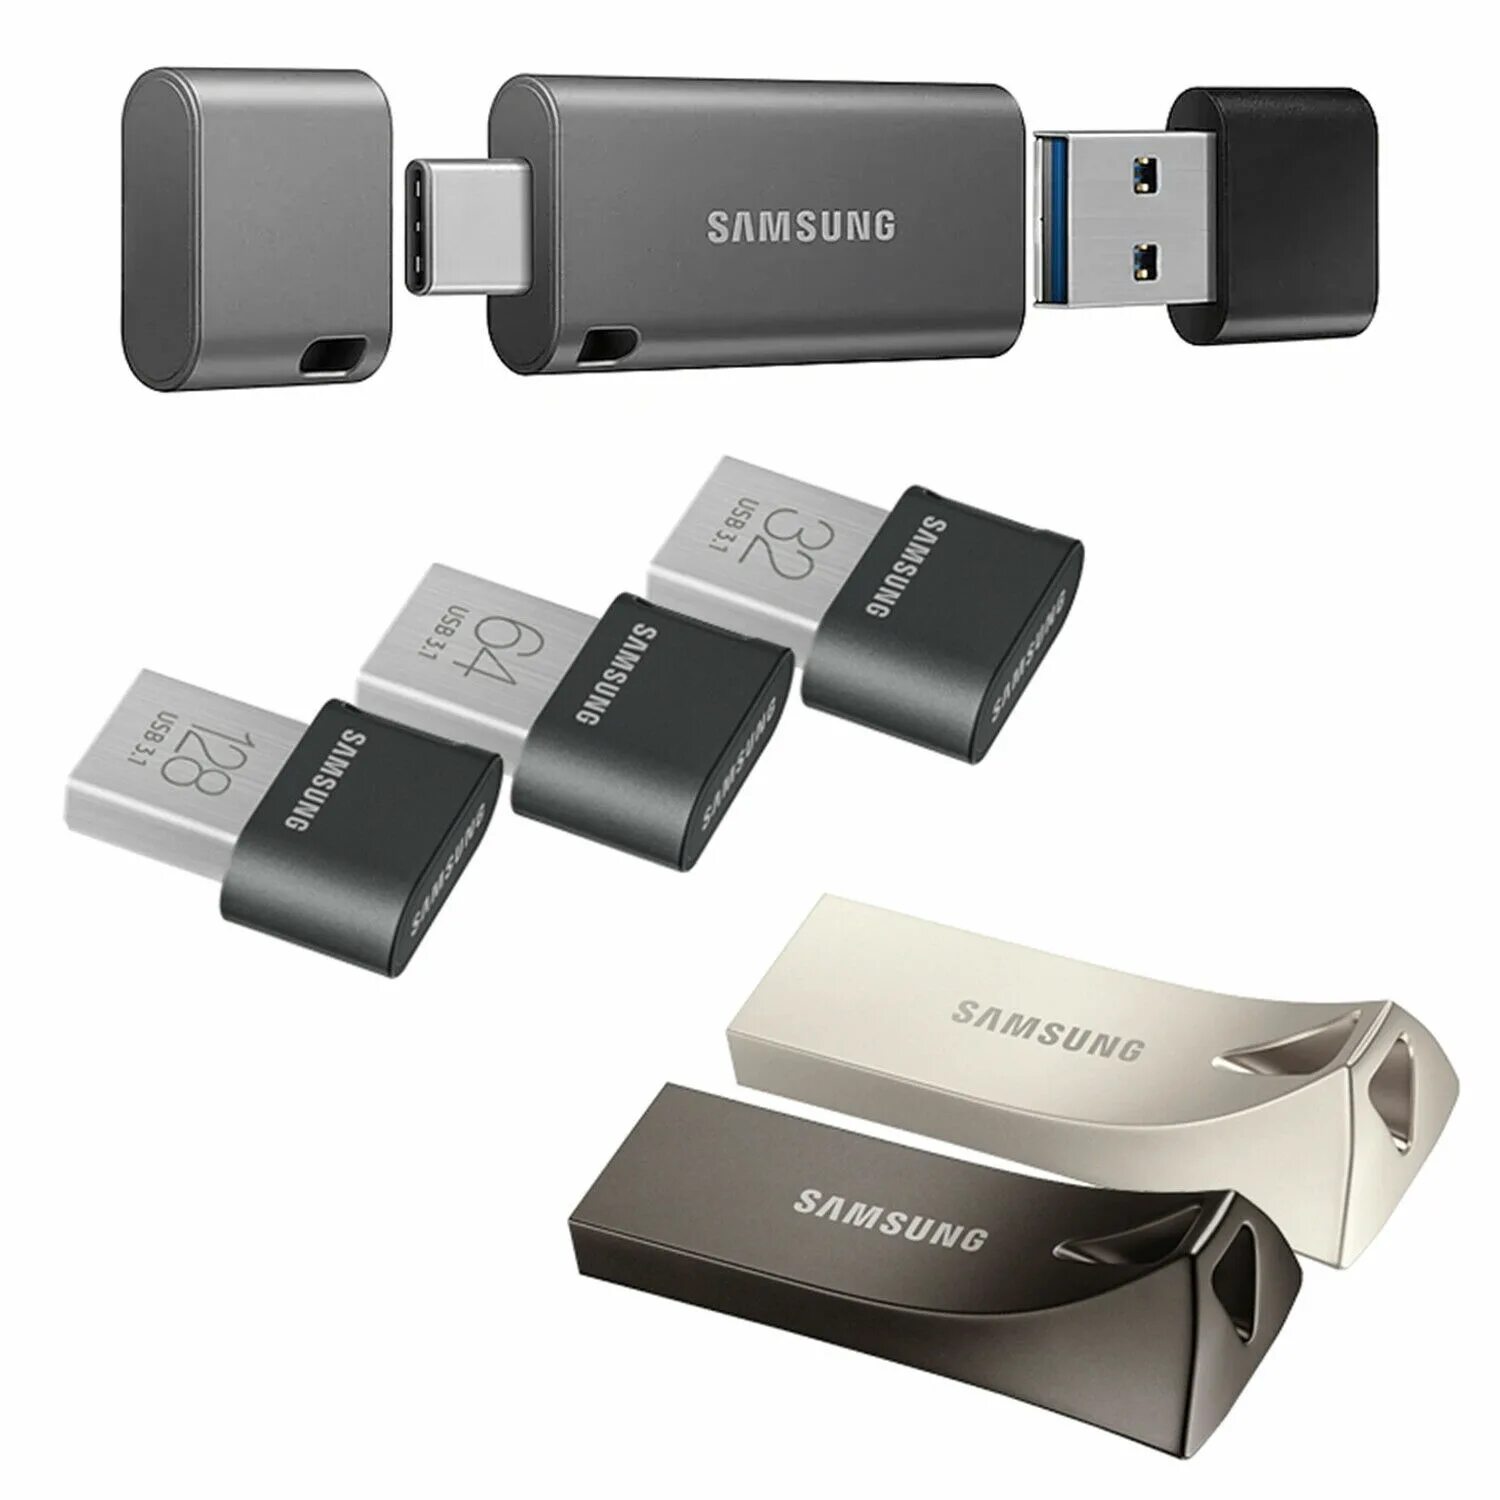 Самсунг флешка память. Samsung USB 3.1 Flash Drive Duo Plus. Samsung USB 3.1 Flash Drive Fit Plus. Флешка Samsung USB 3.1 Flash Drive Fit Plus 128gb. Samsung Duo Plus USB 3.1 64gb.